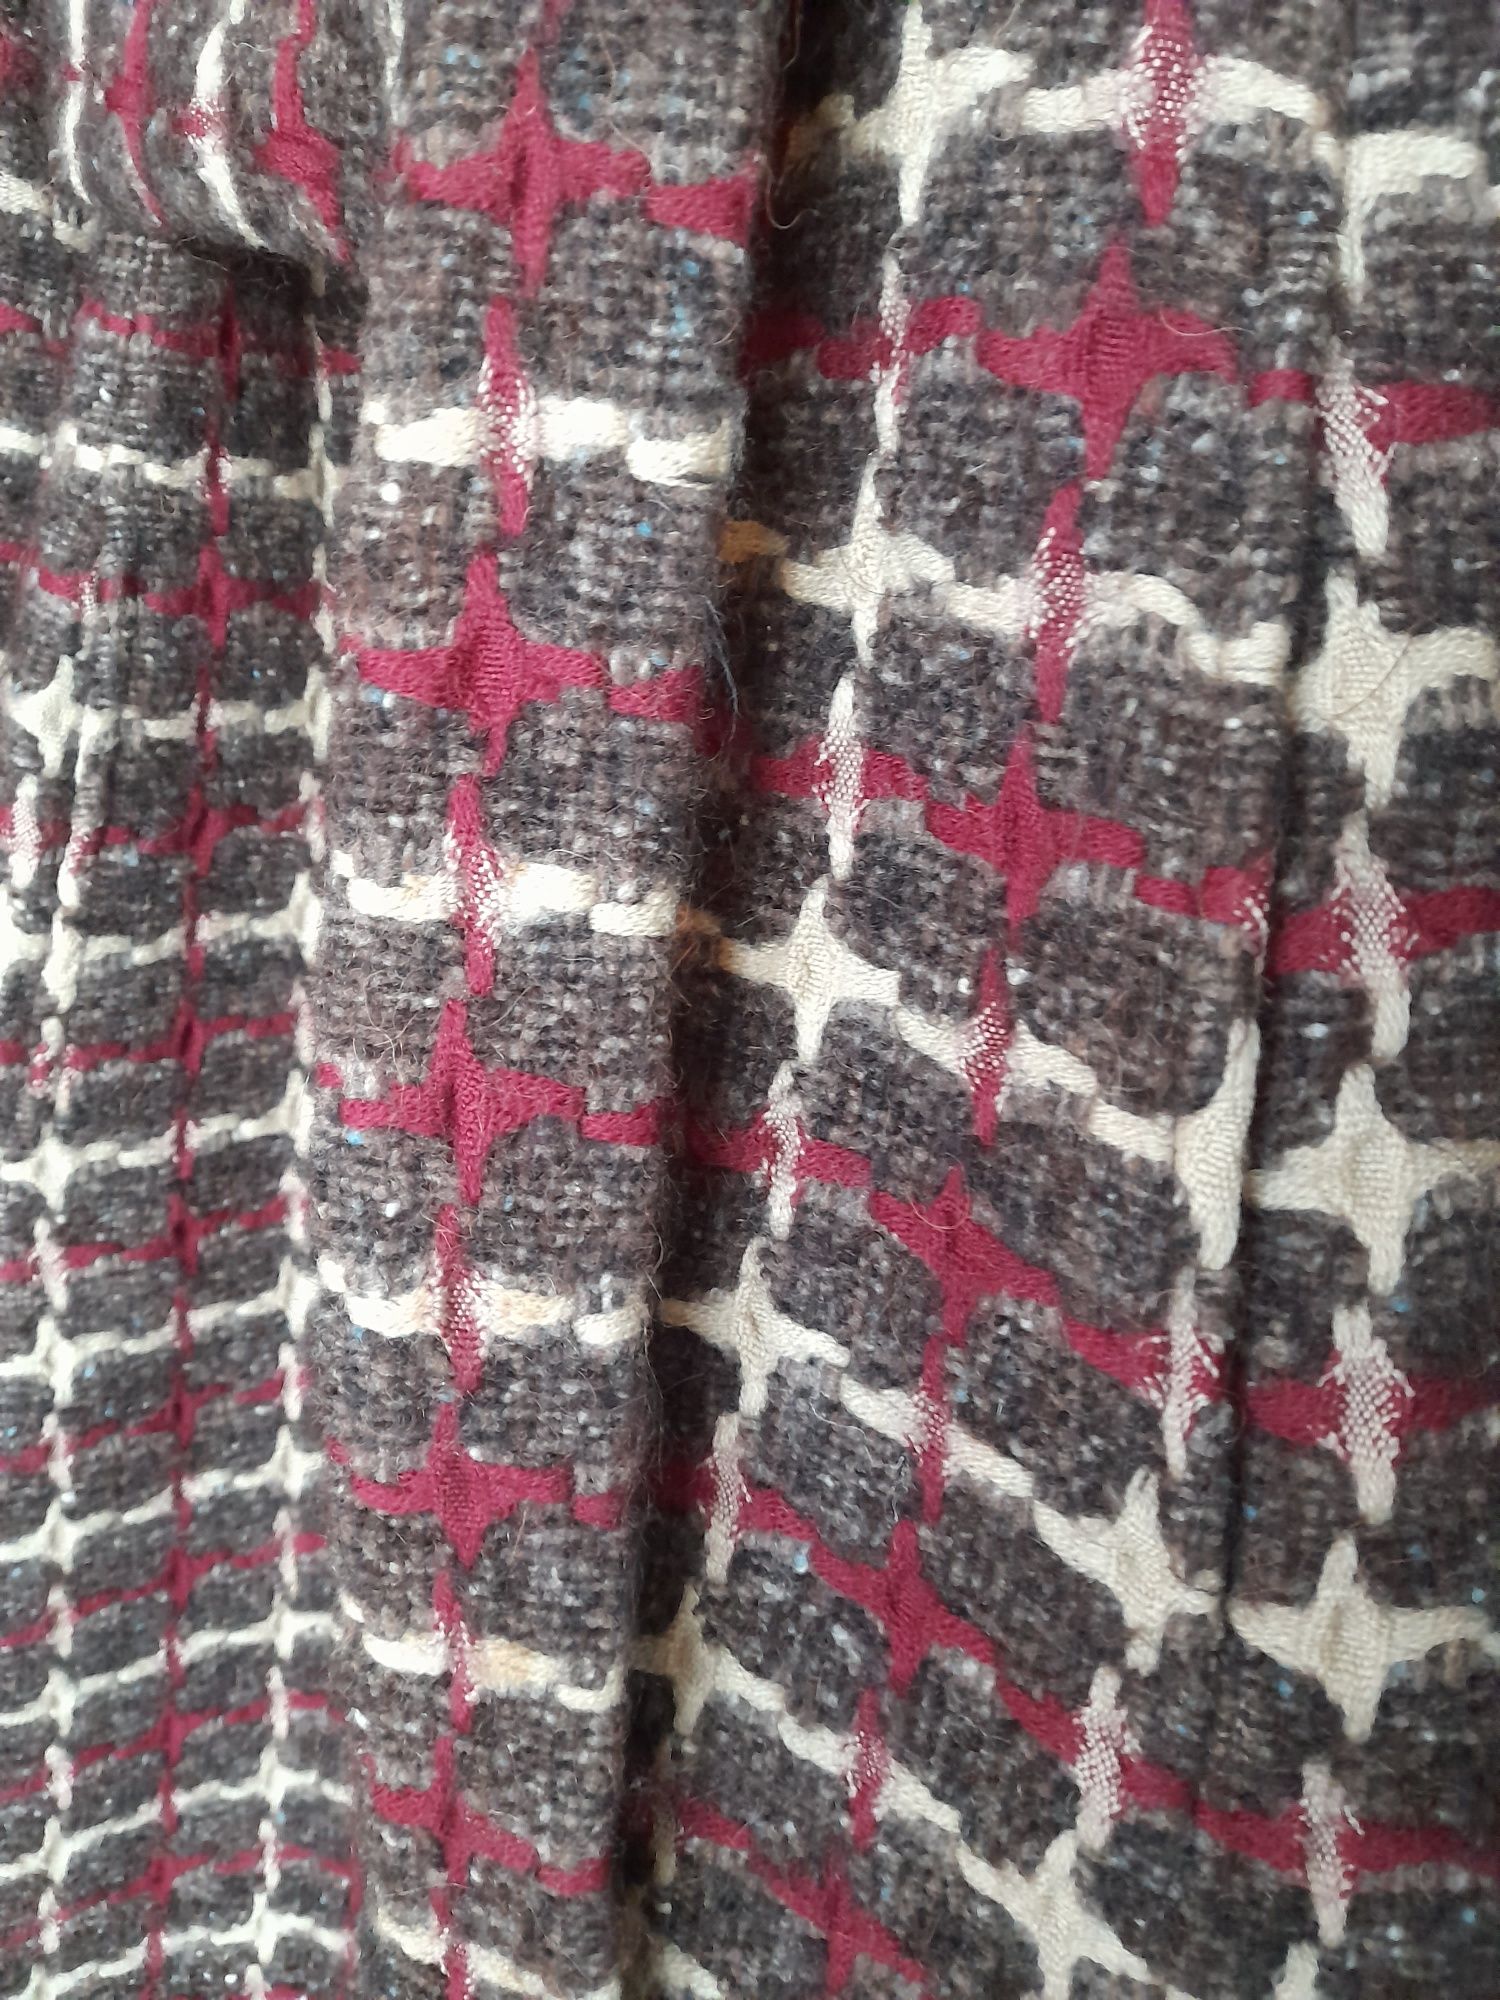 Palton cu gluga - contine lana - marimea 36 S